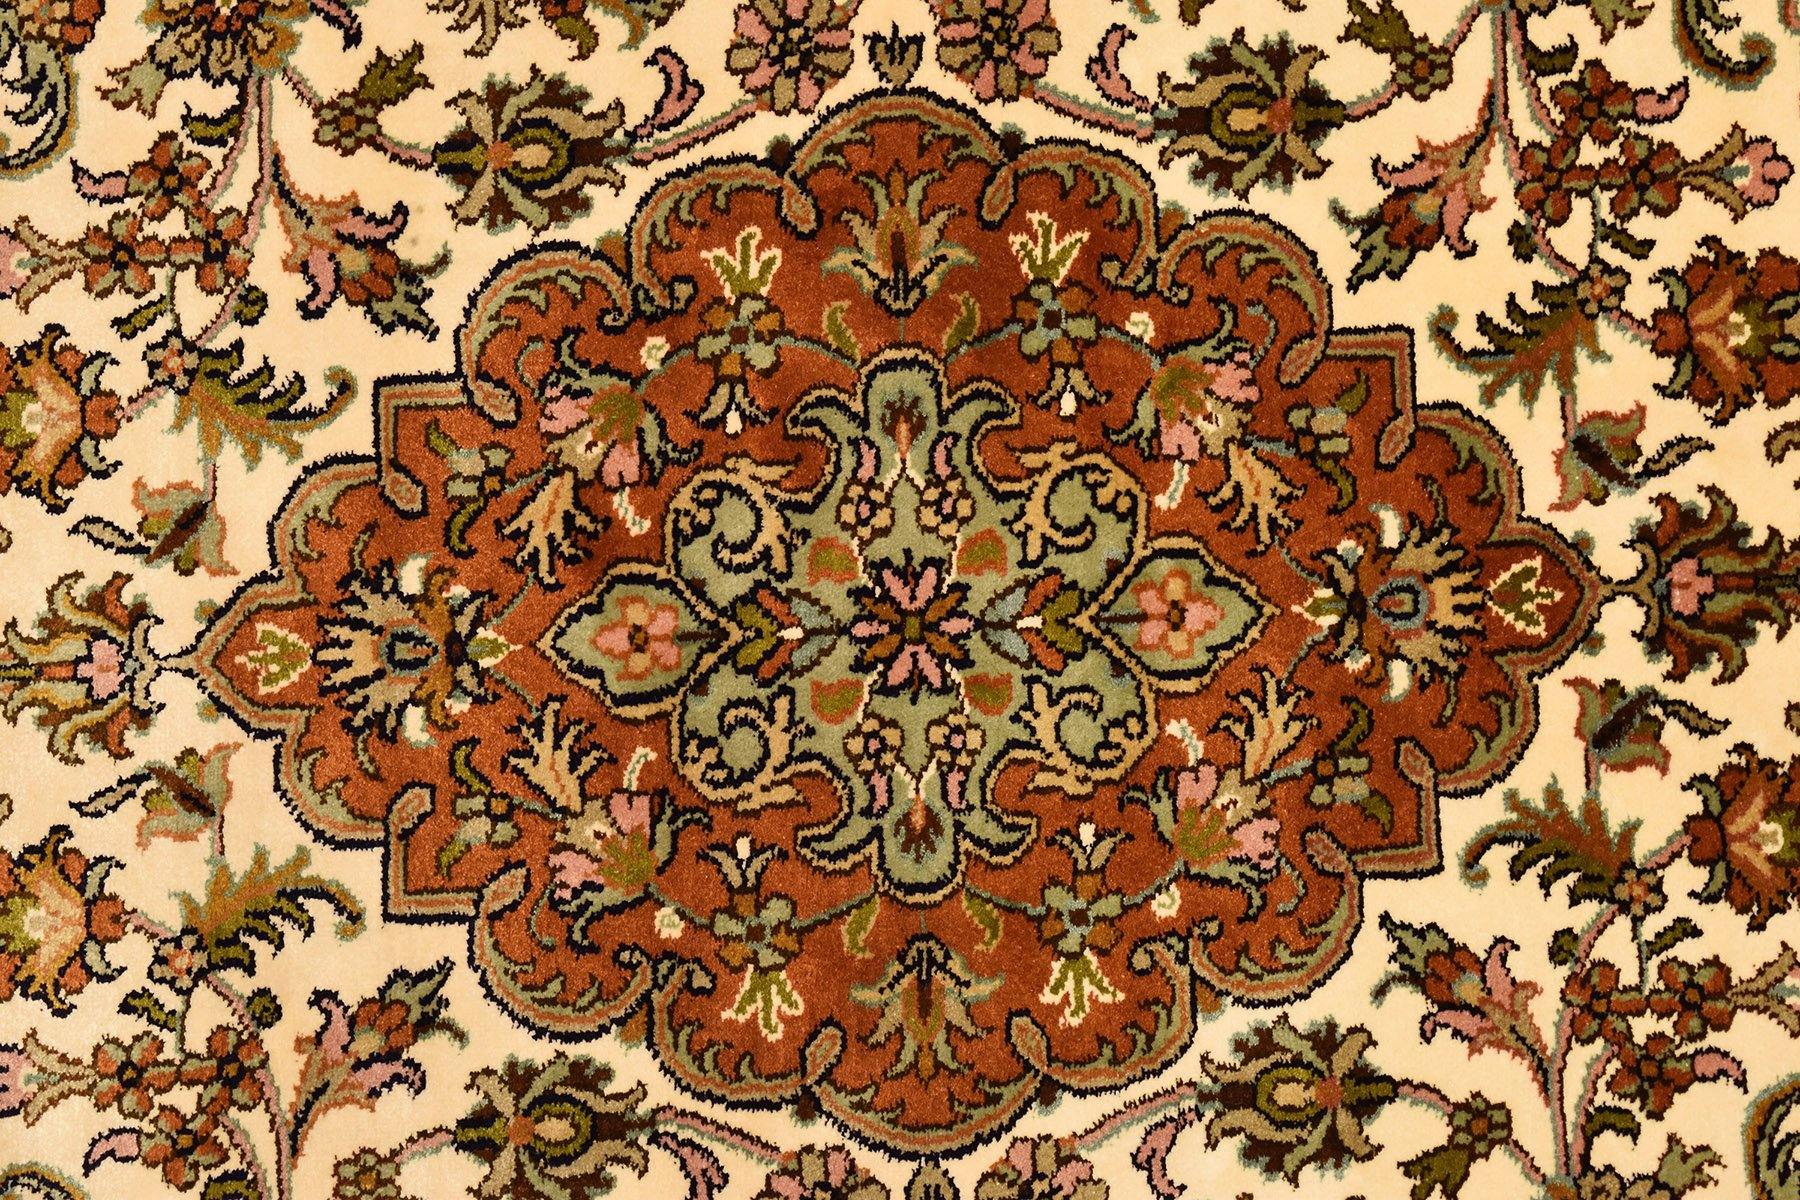 2.5'x4' Blue Kashan Silk Rug Oriental Carpet MedallionDesign Navy